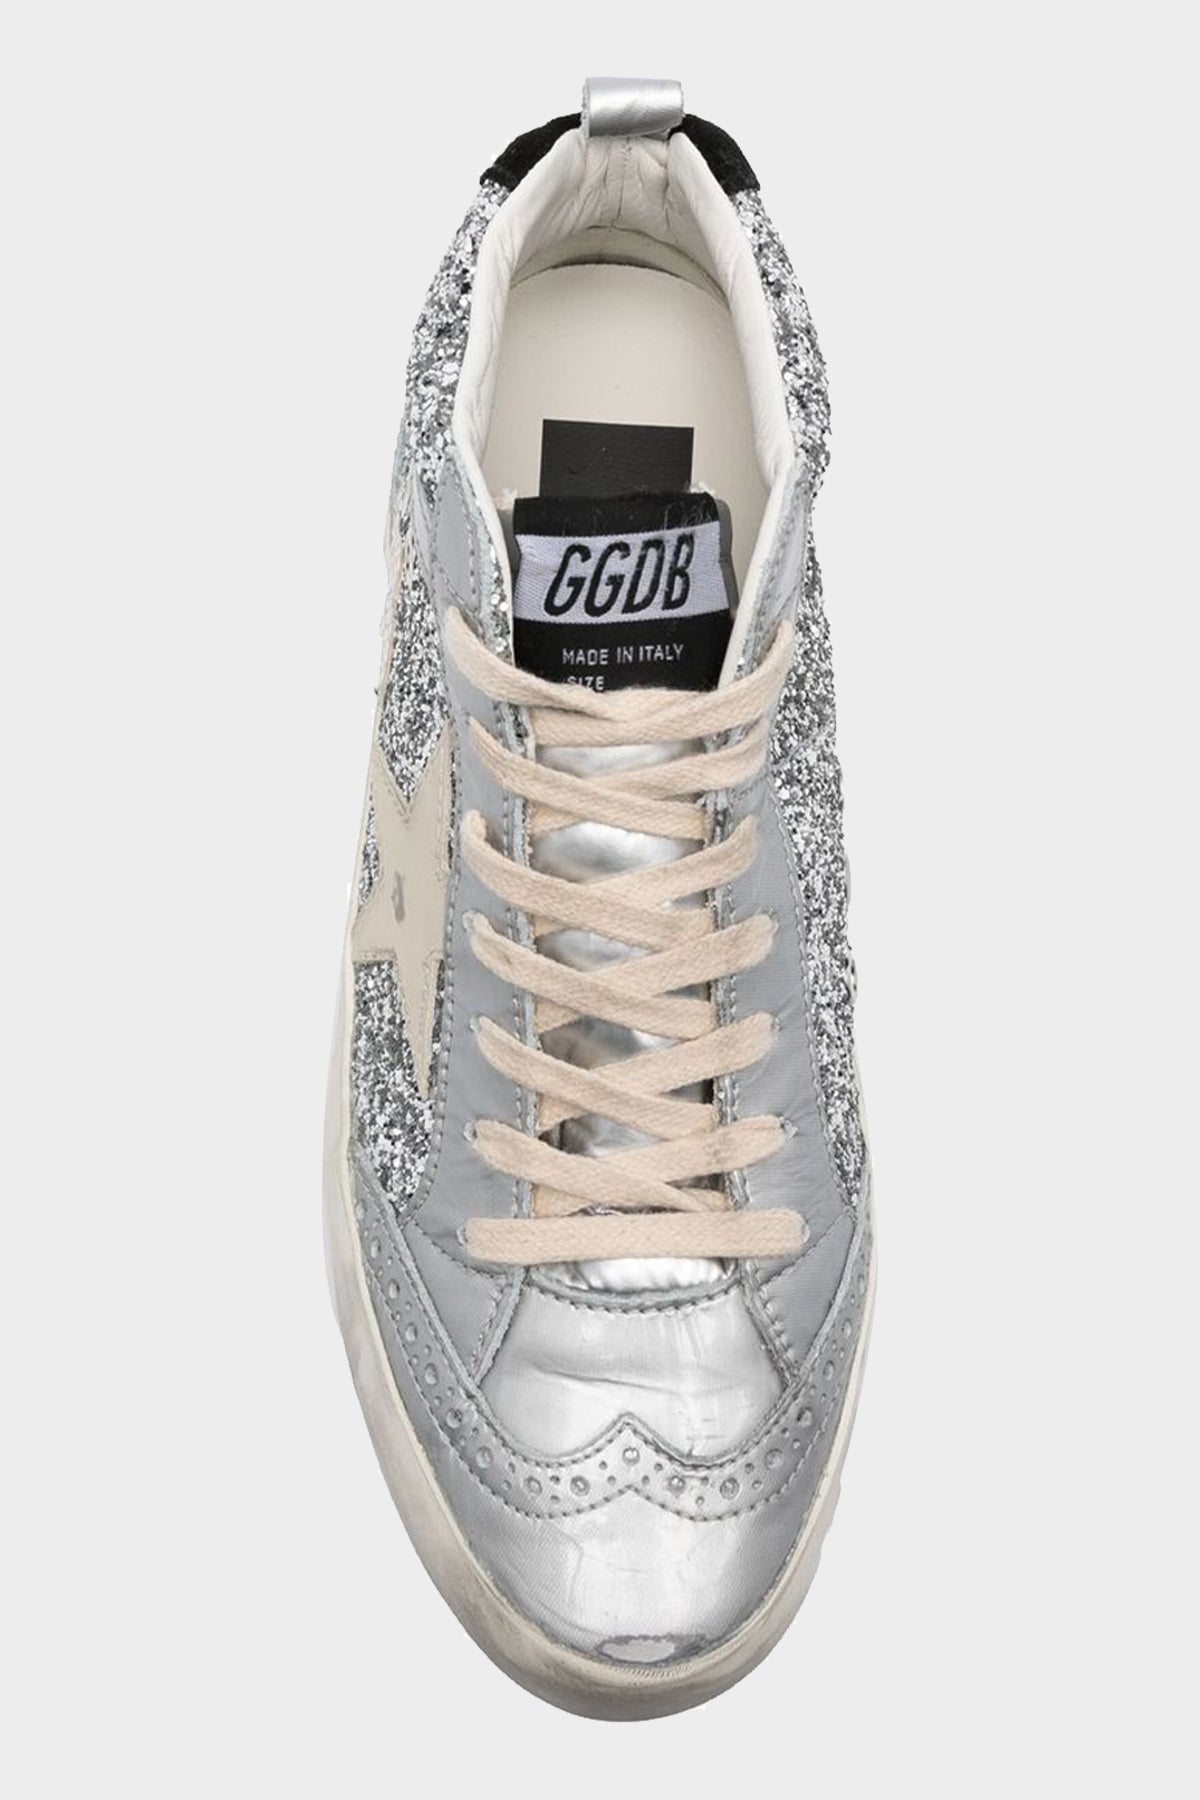 Mid-Star Silver Glitter Leather Sneaker - shop-olivia.com